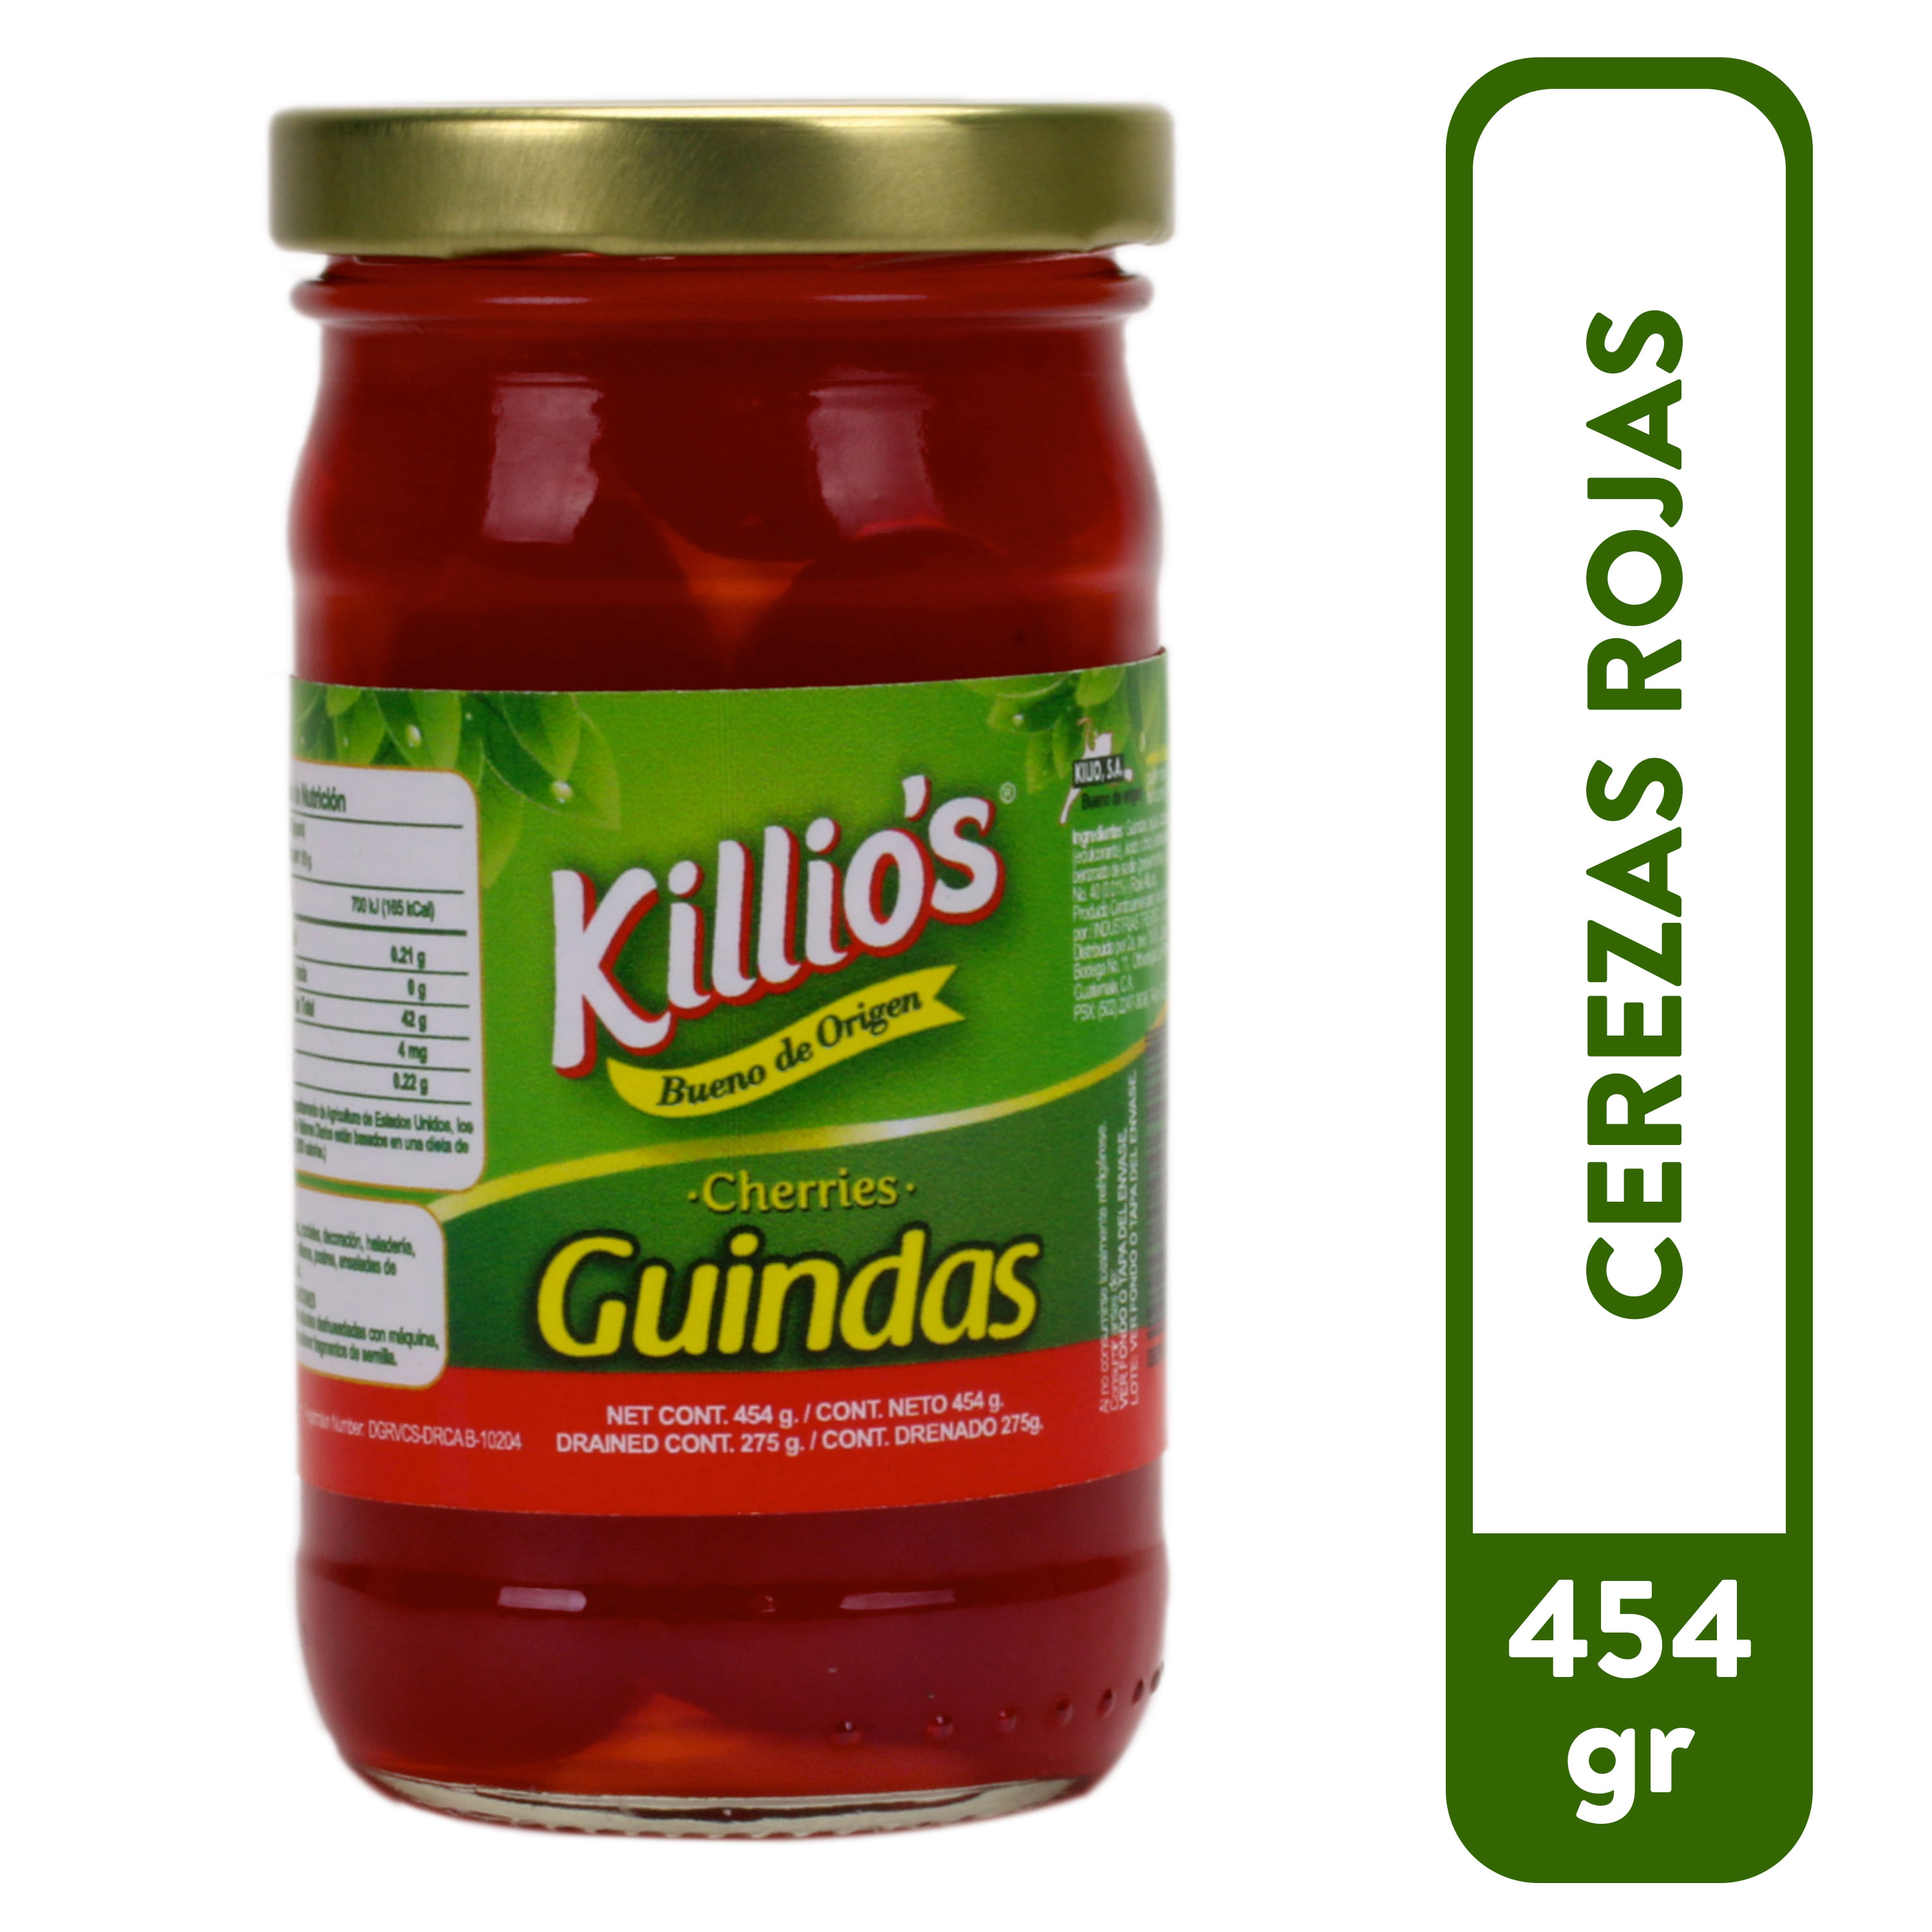 Guindas-Killios-Rojas-227gr-1-30869